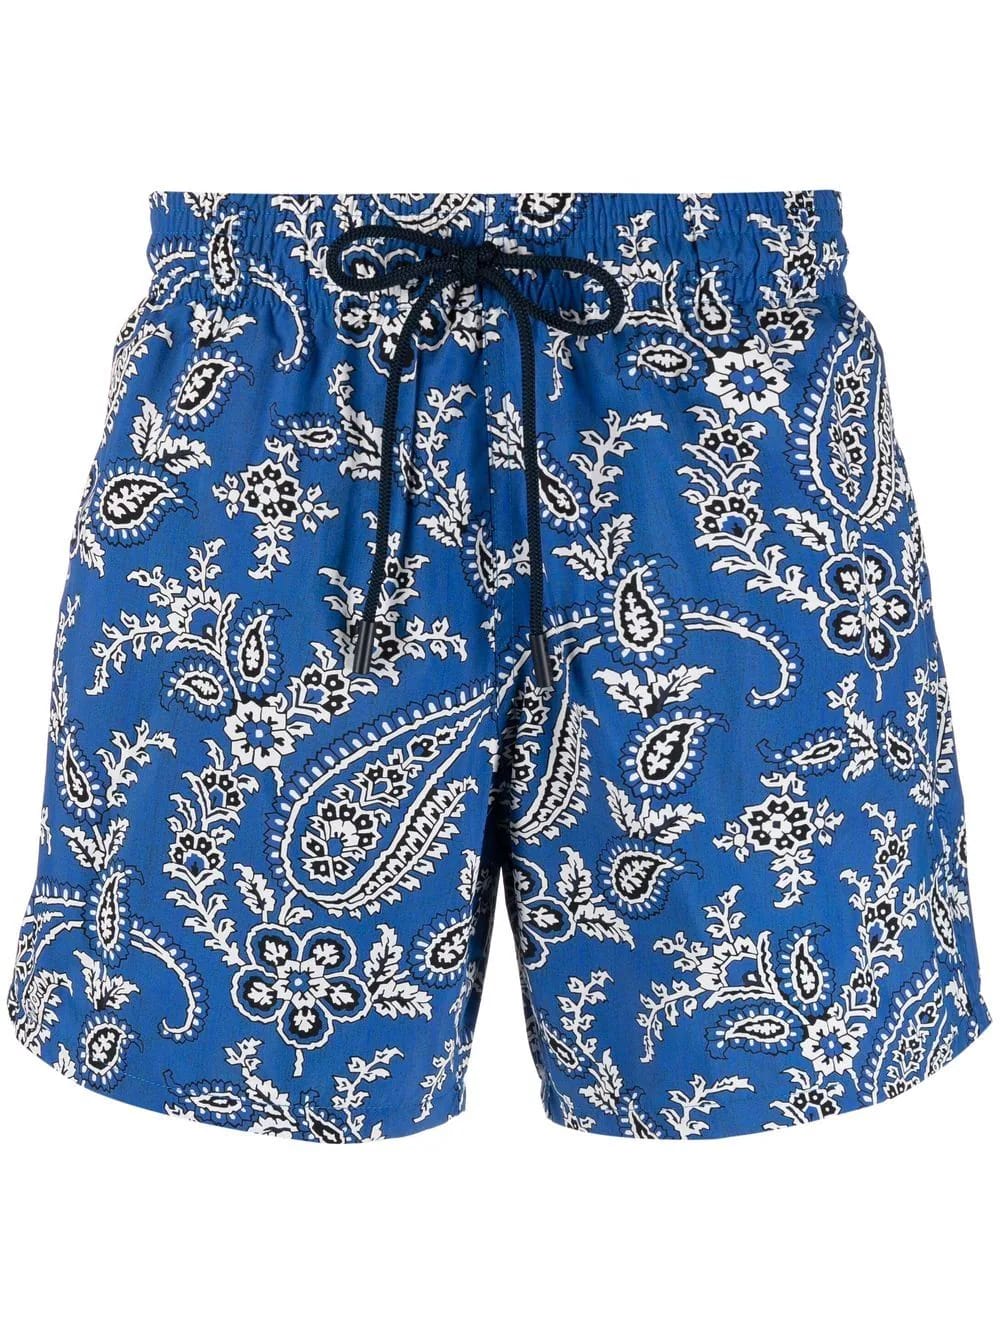 Etro Royal Blue Swim Shorts With Contrast Paisley Print